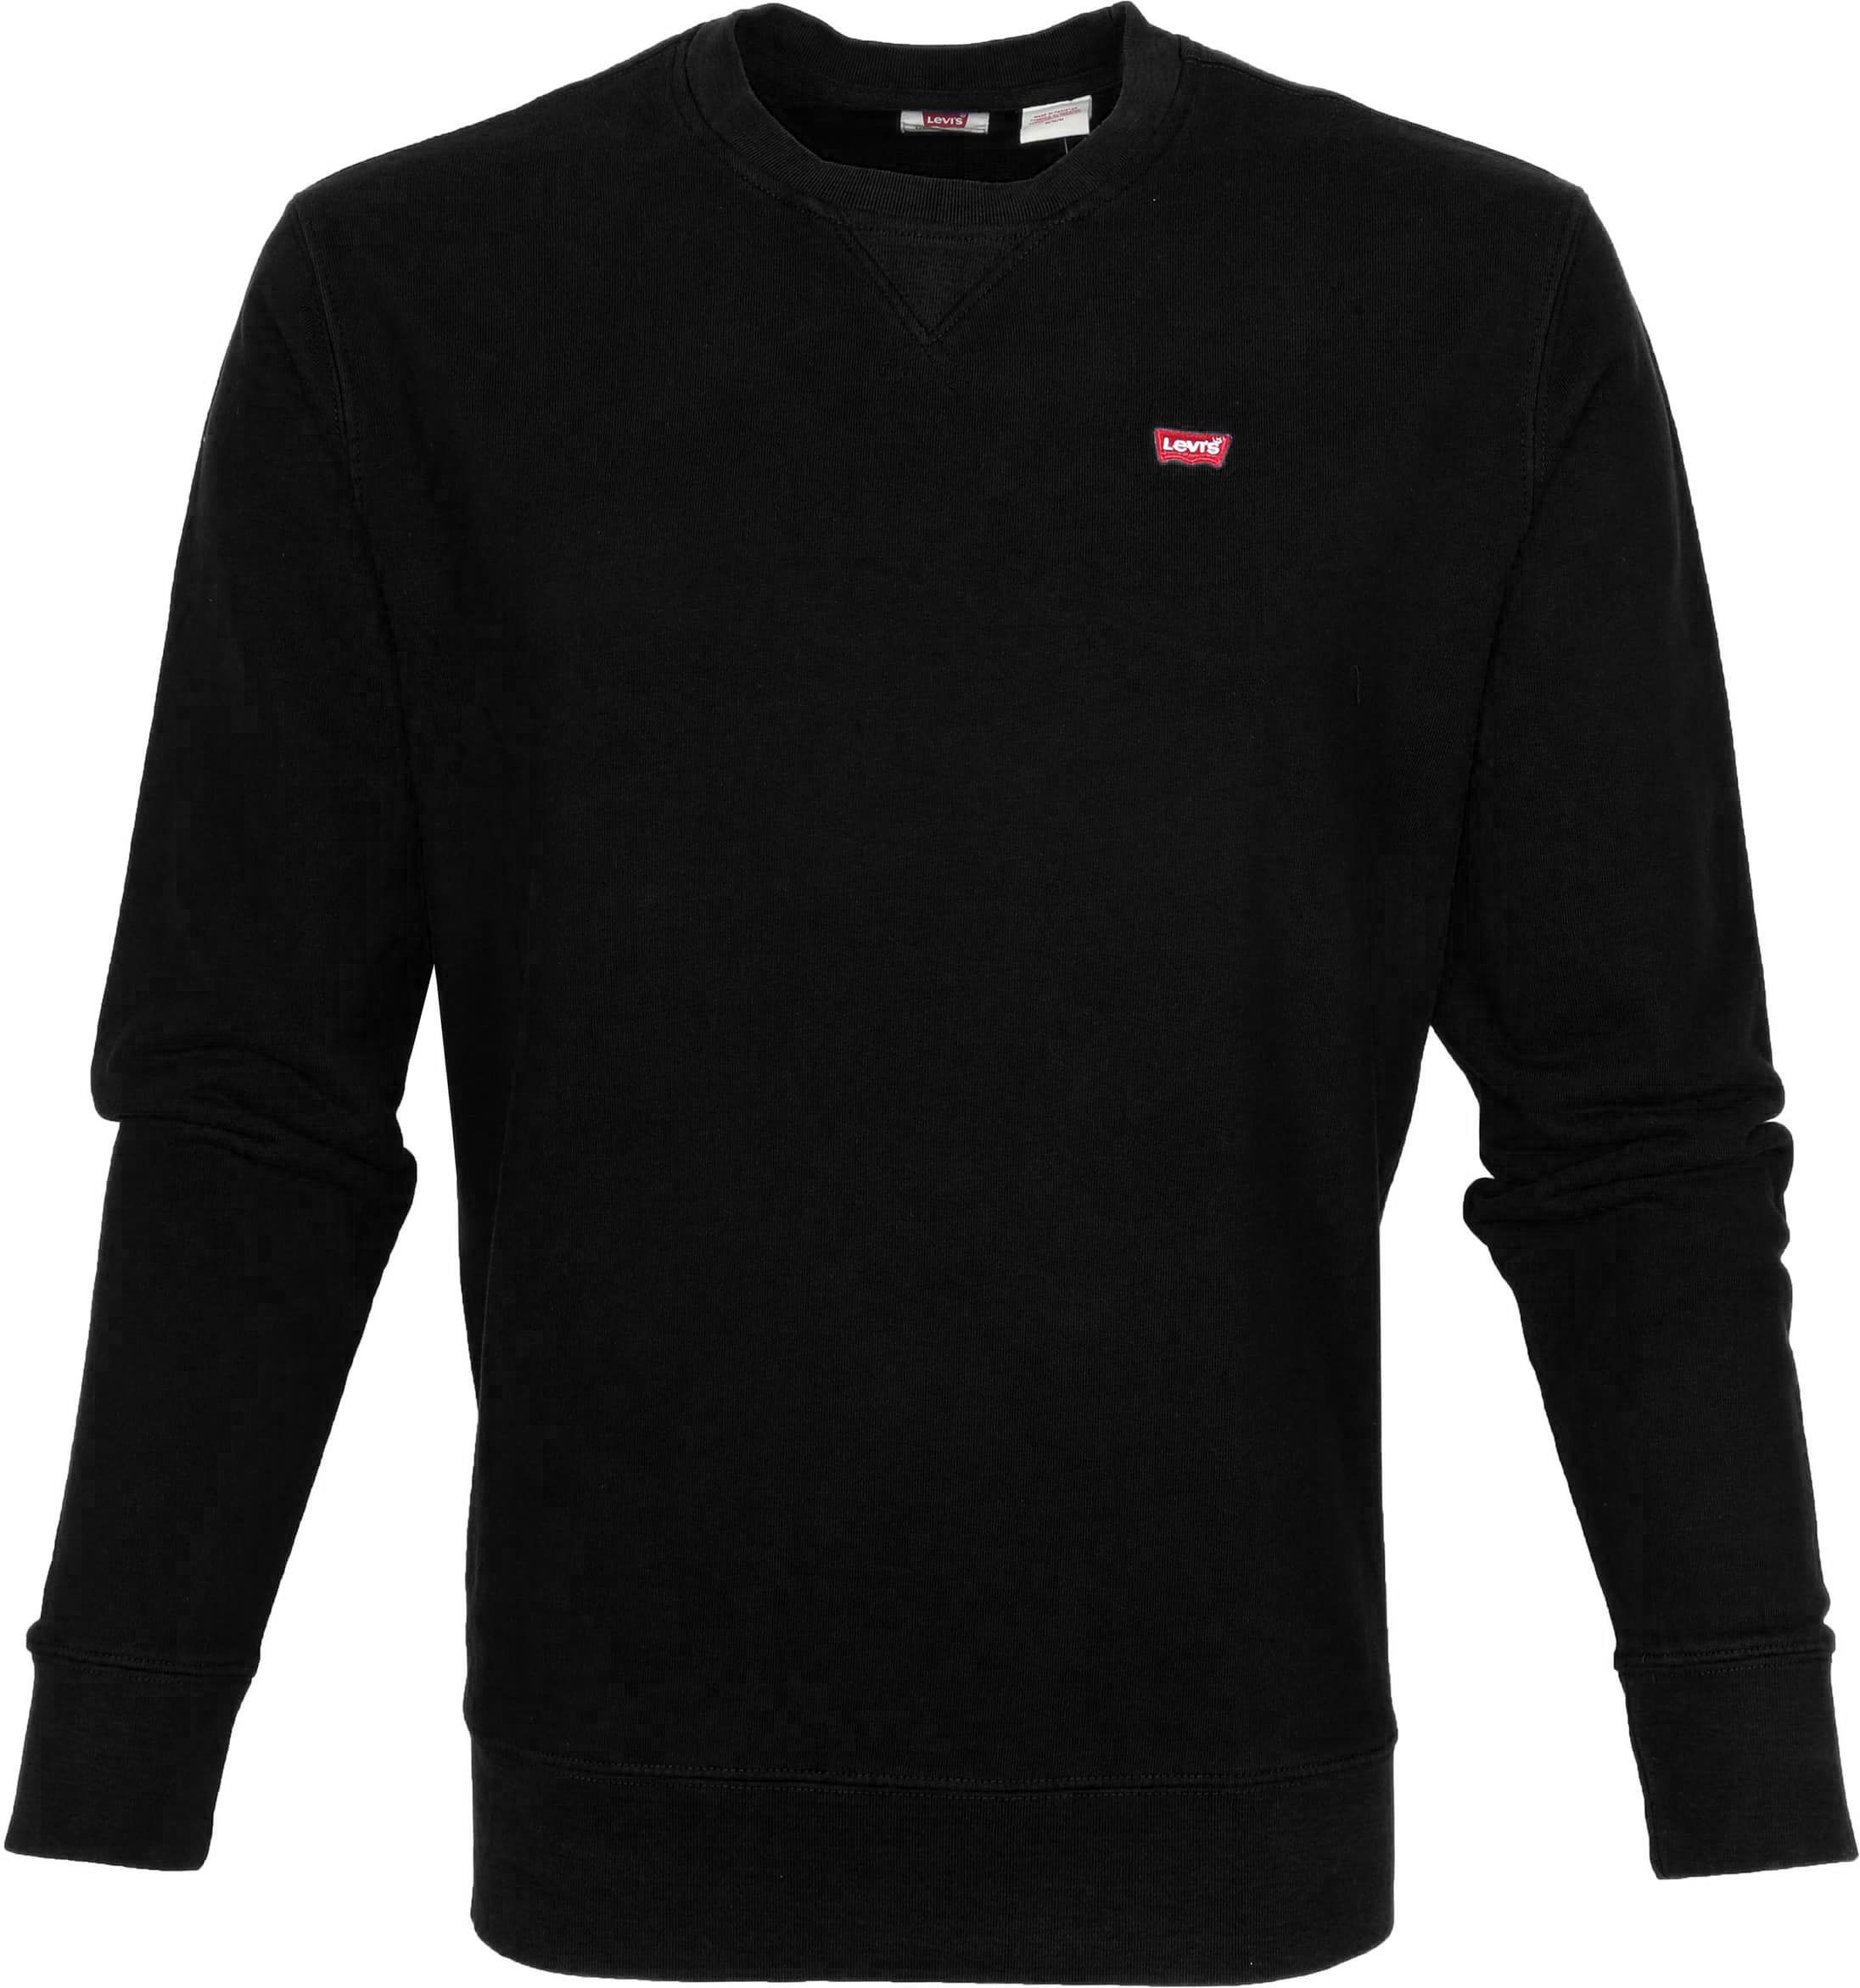 Levi's Original Sweater Black Dark Green size L